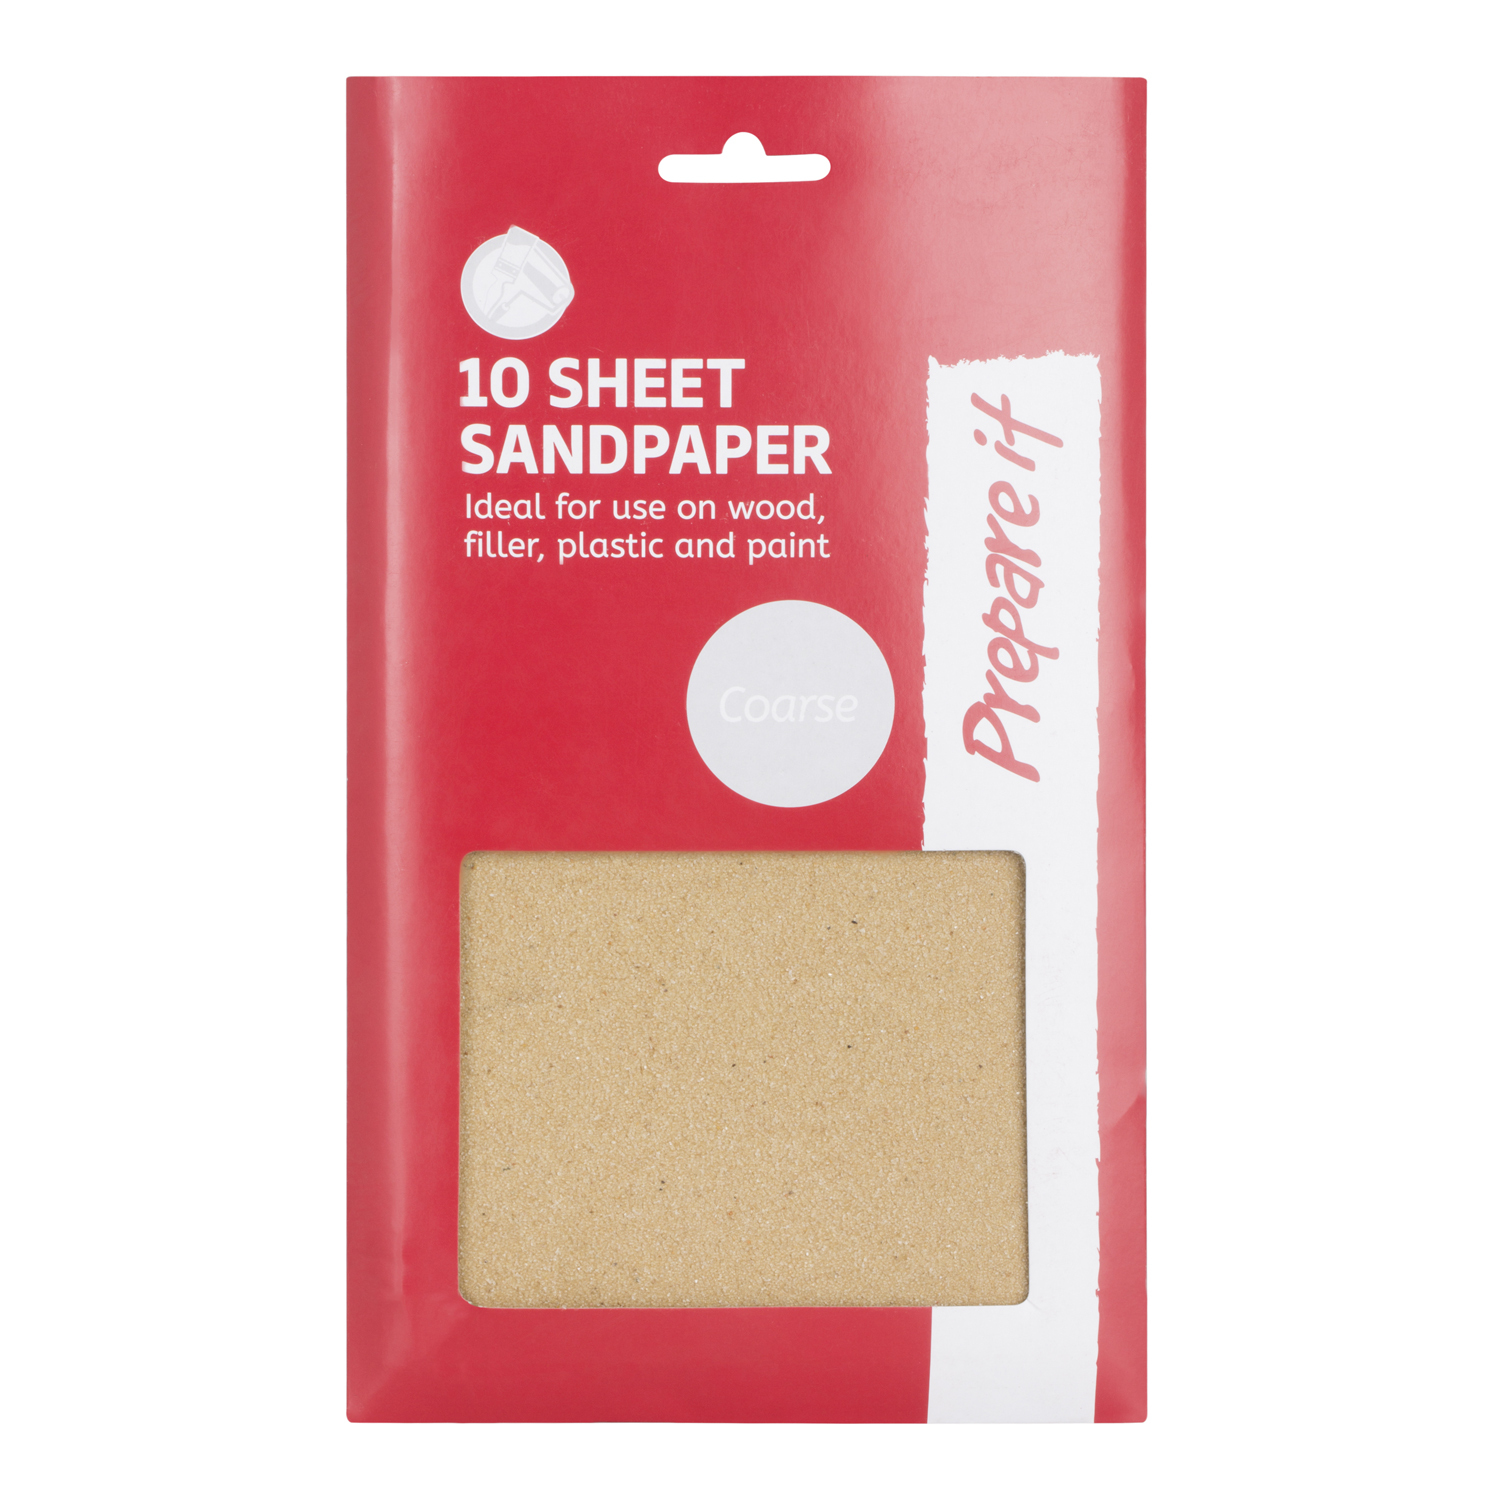 Prepare it Coarse Grit Sandpaper Sheets 10 Pack Image